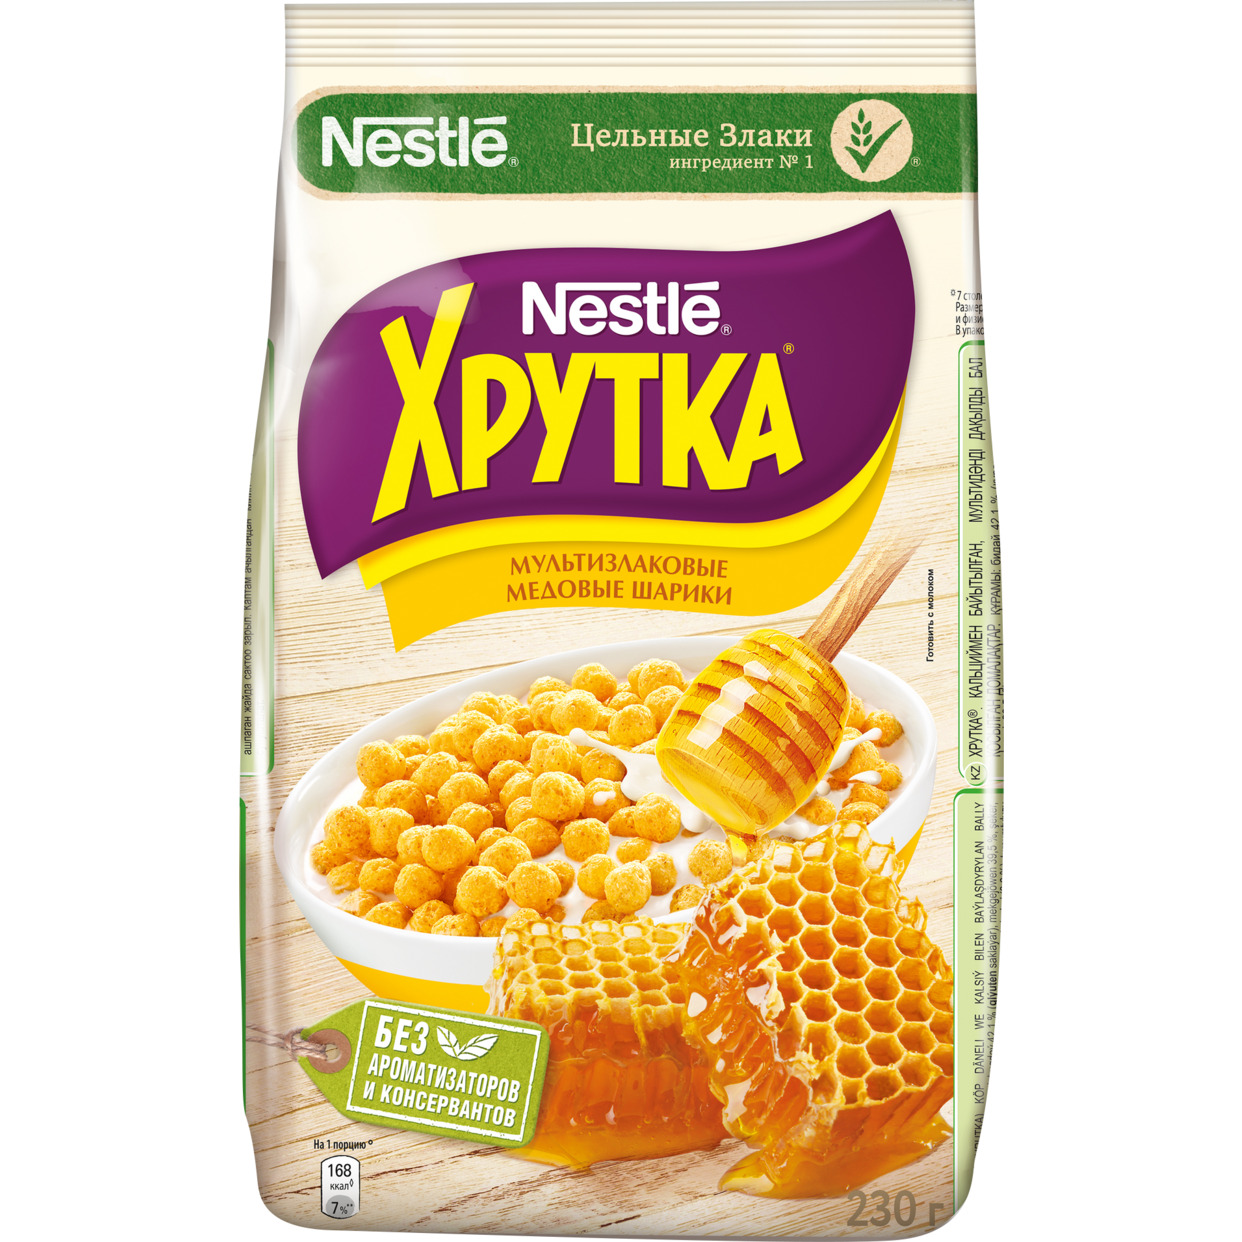 ХРУТКА Nestle ЗавтракМедШарики гот230г по акции в Пятерочке